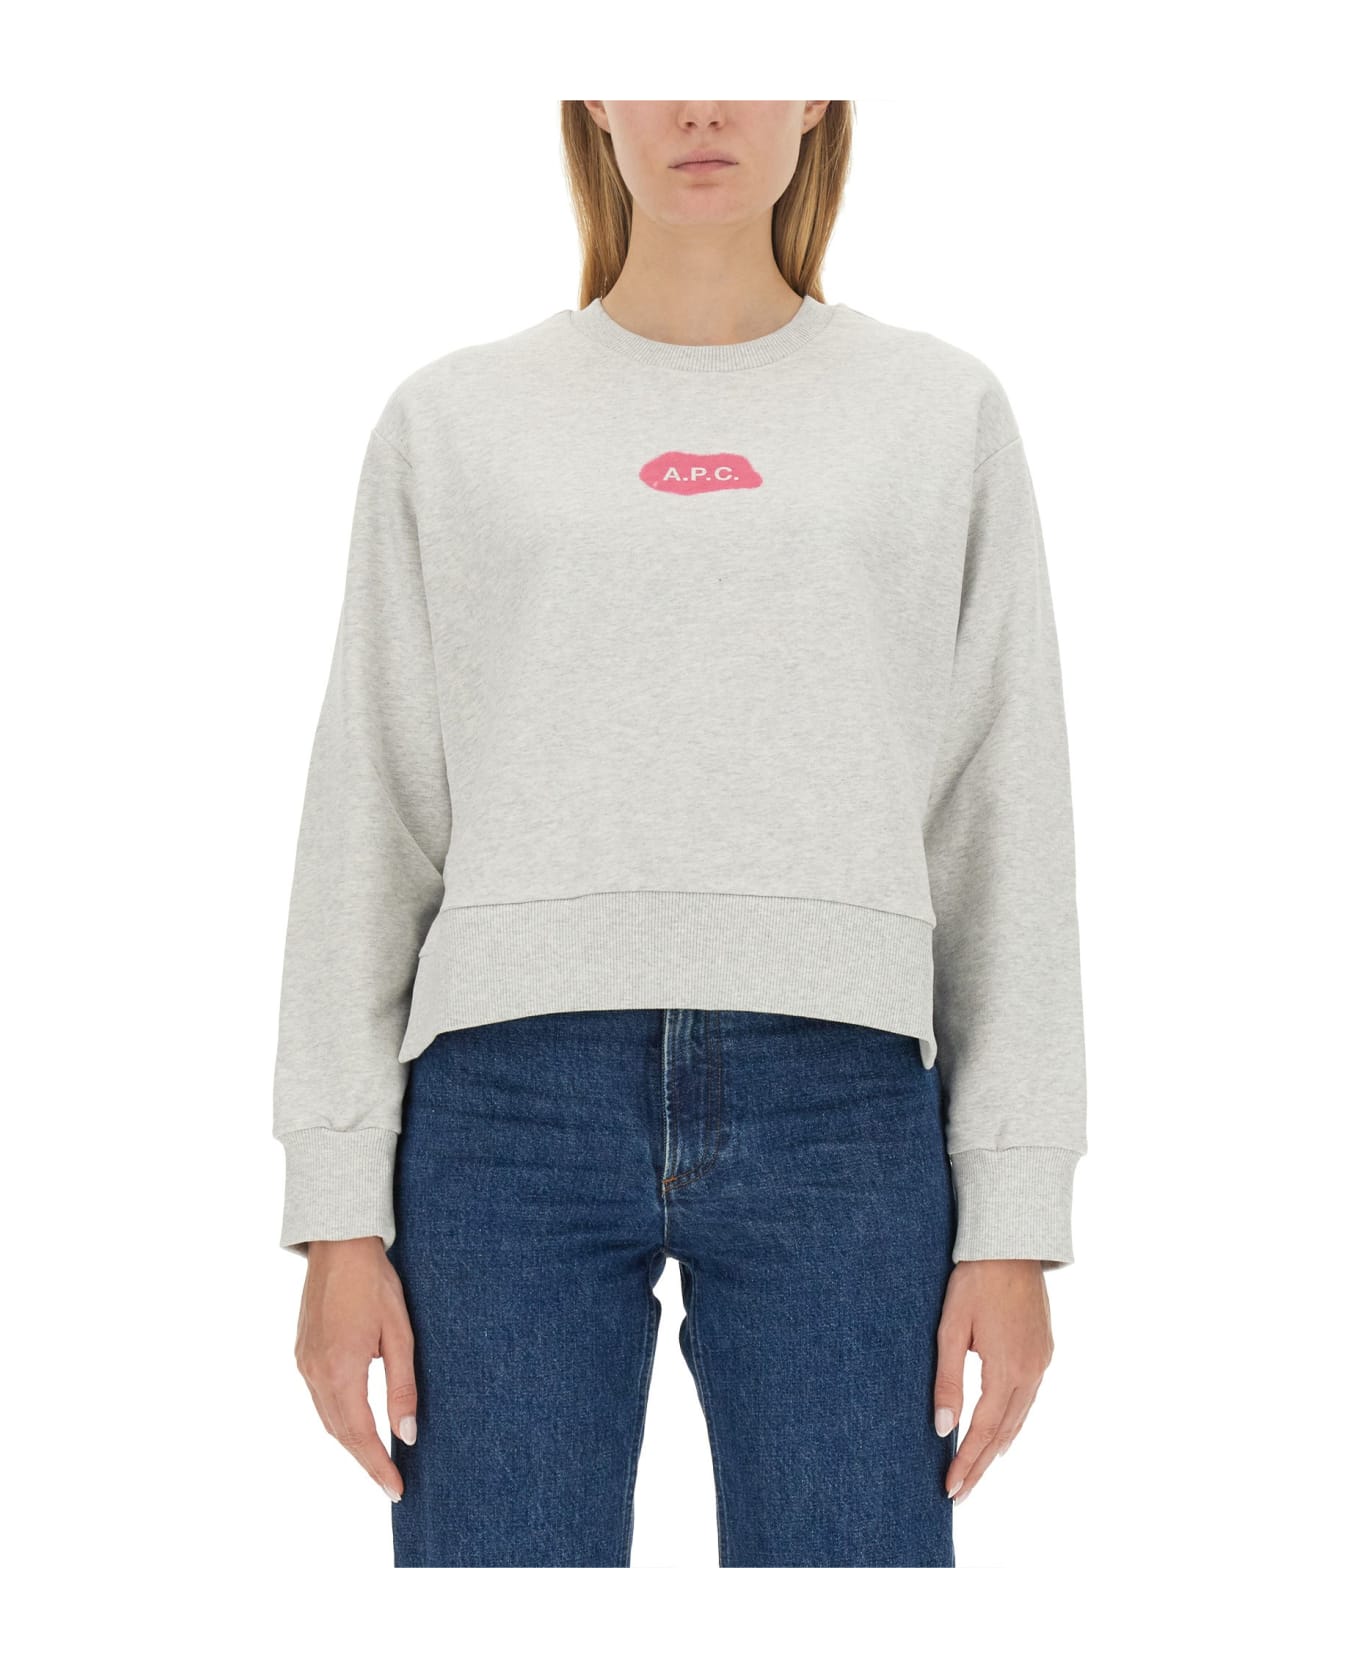 A.P.C. Cotton Sweatshirt - GREY